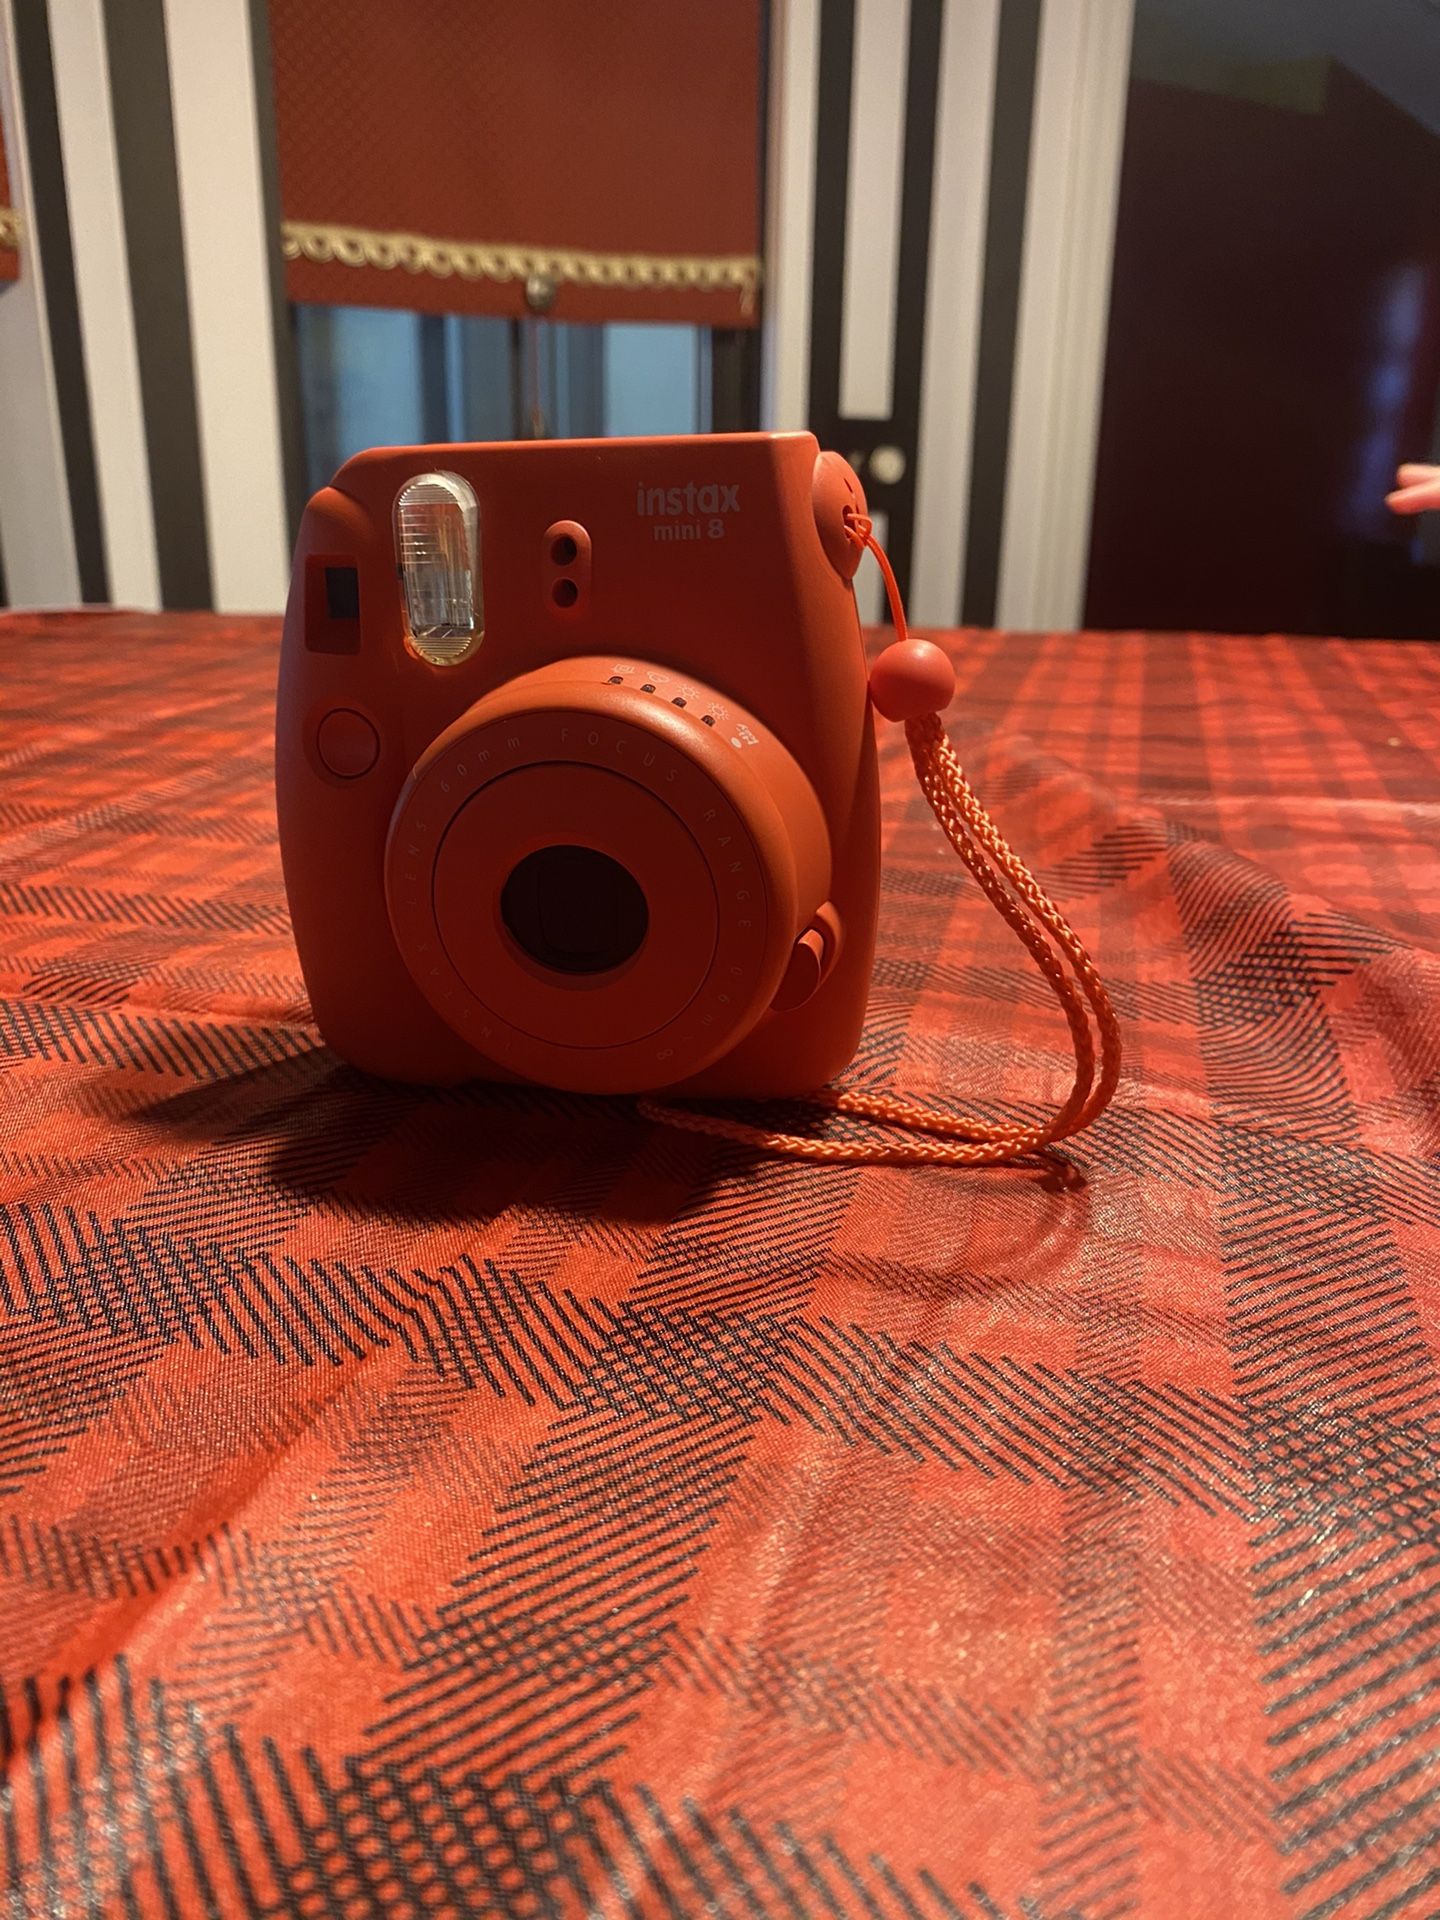 Fiji Instax Mini 8 Polaroid Camera